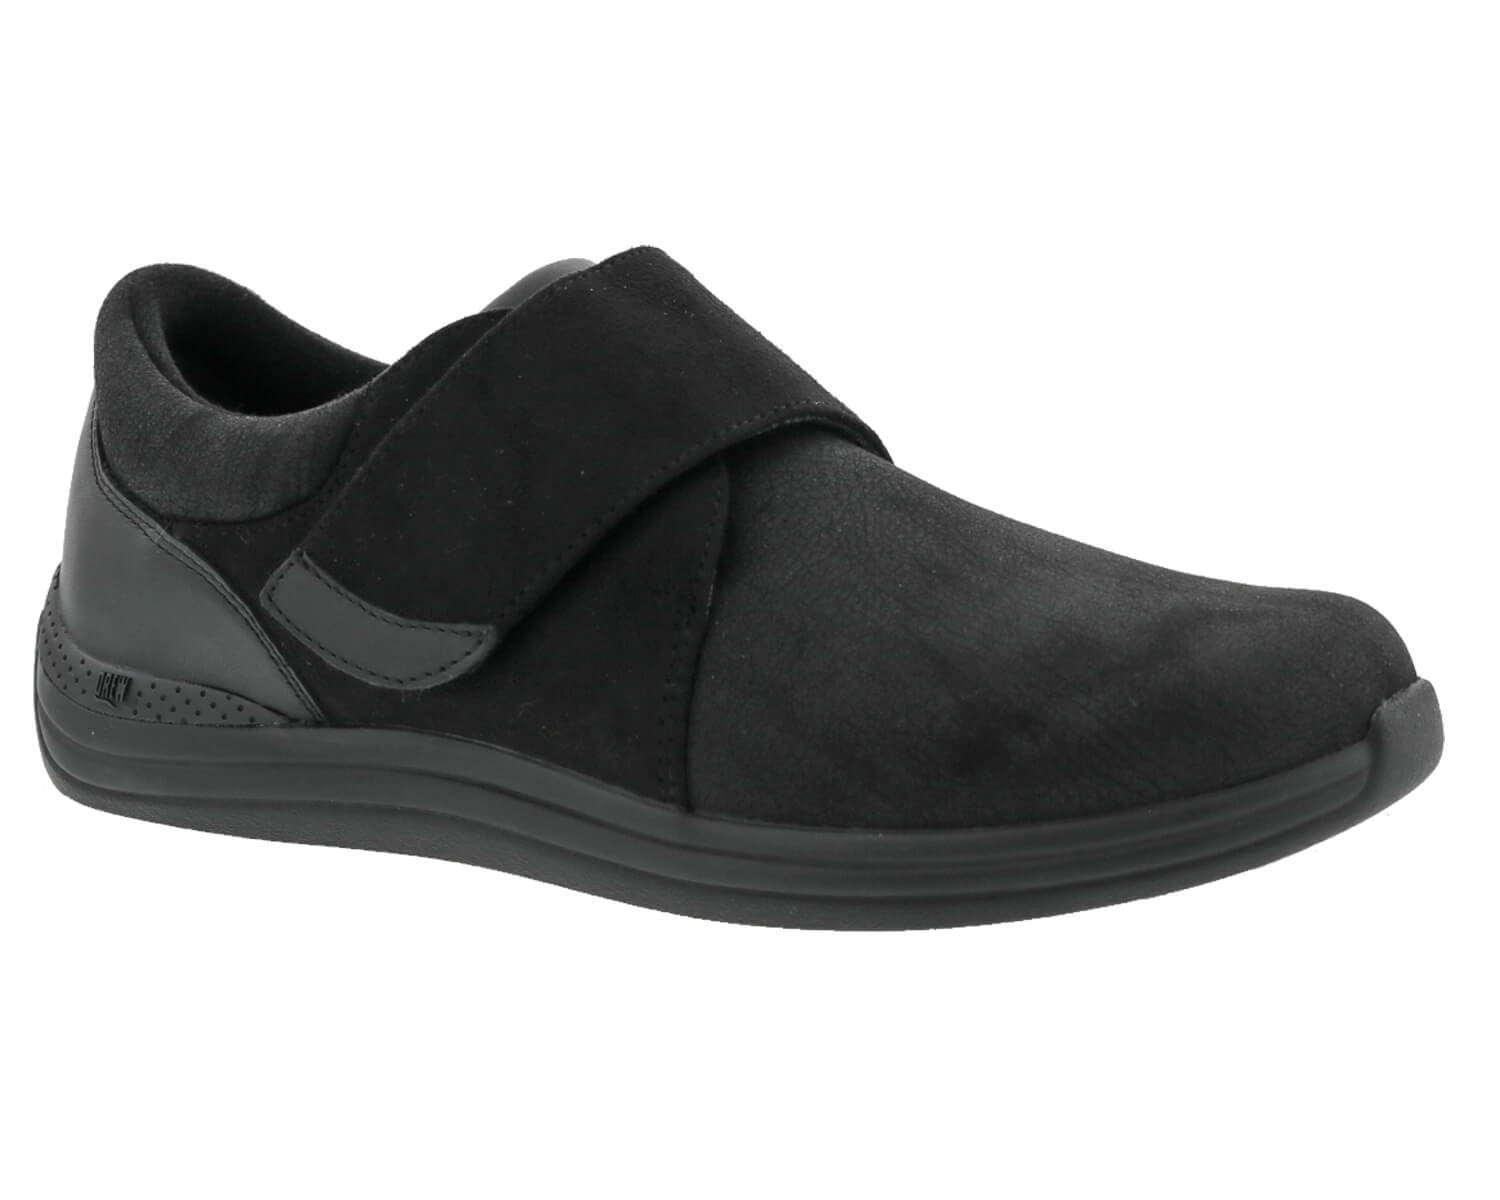 Drew Shoes Moonlite 14105 Women's Casual Shoe - Extra Wide